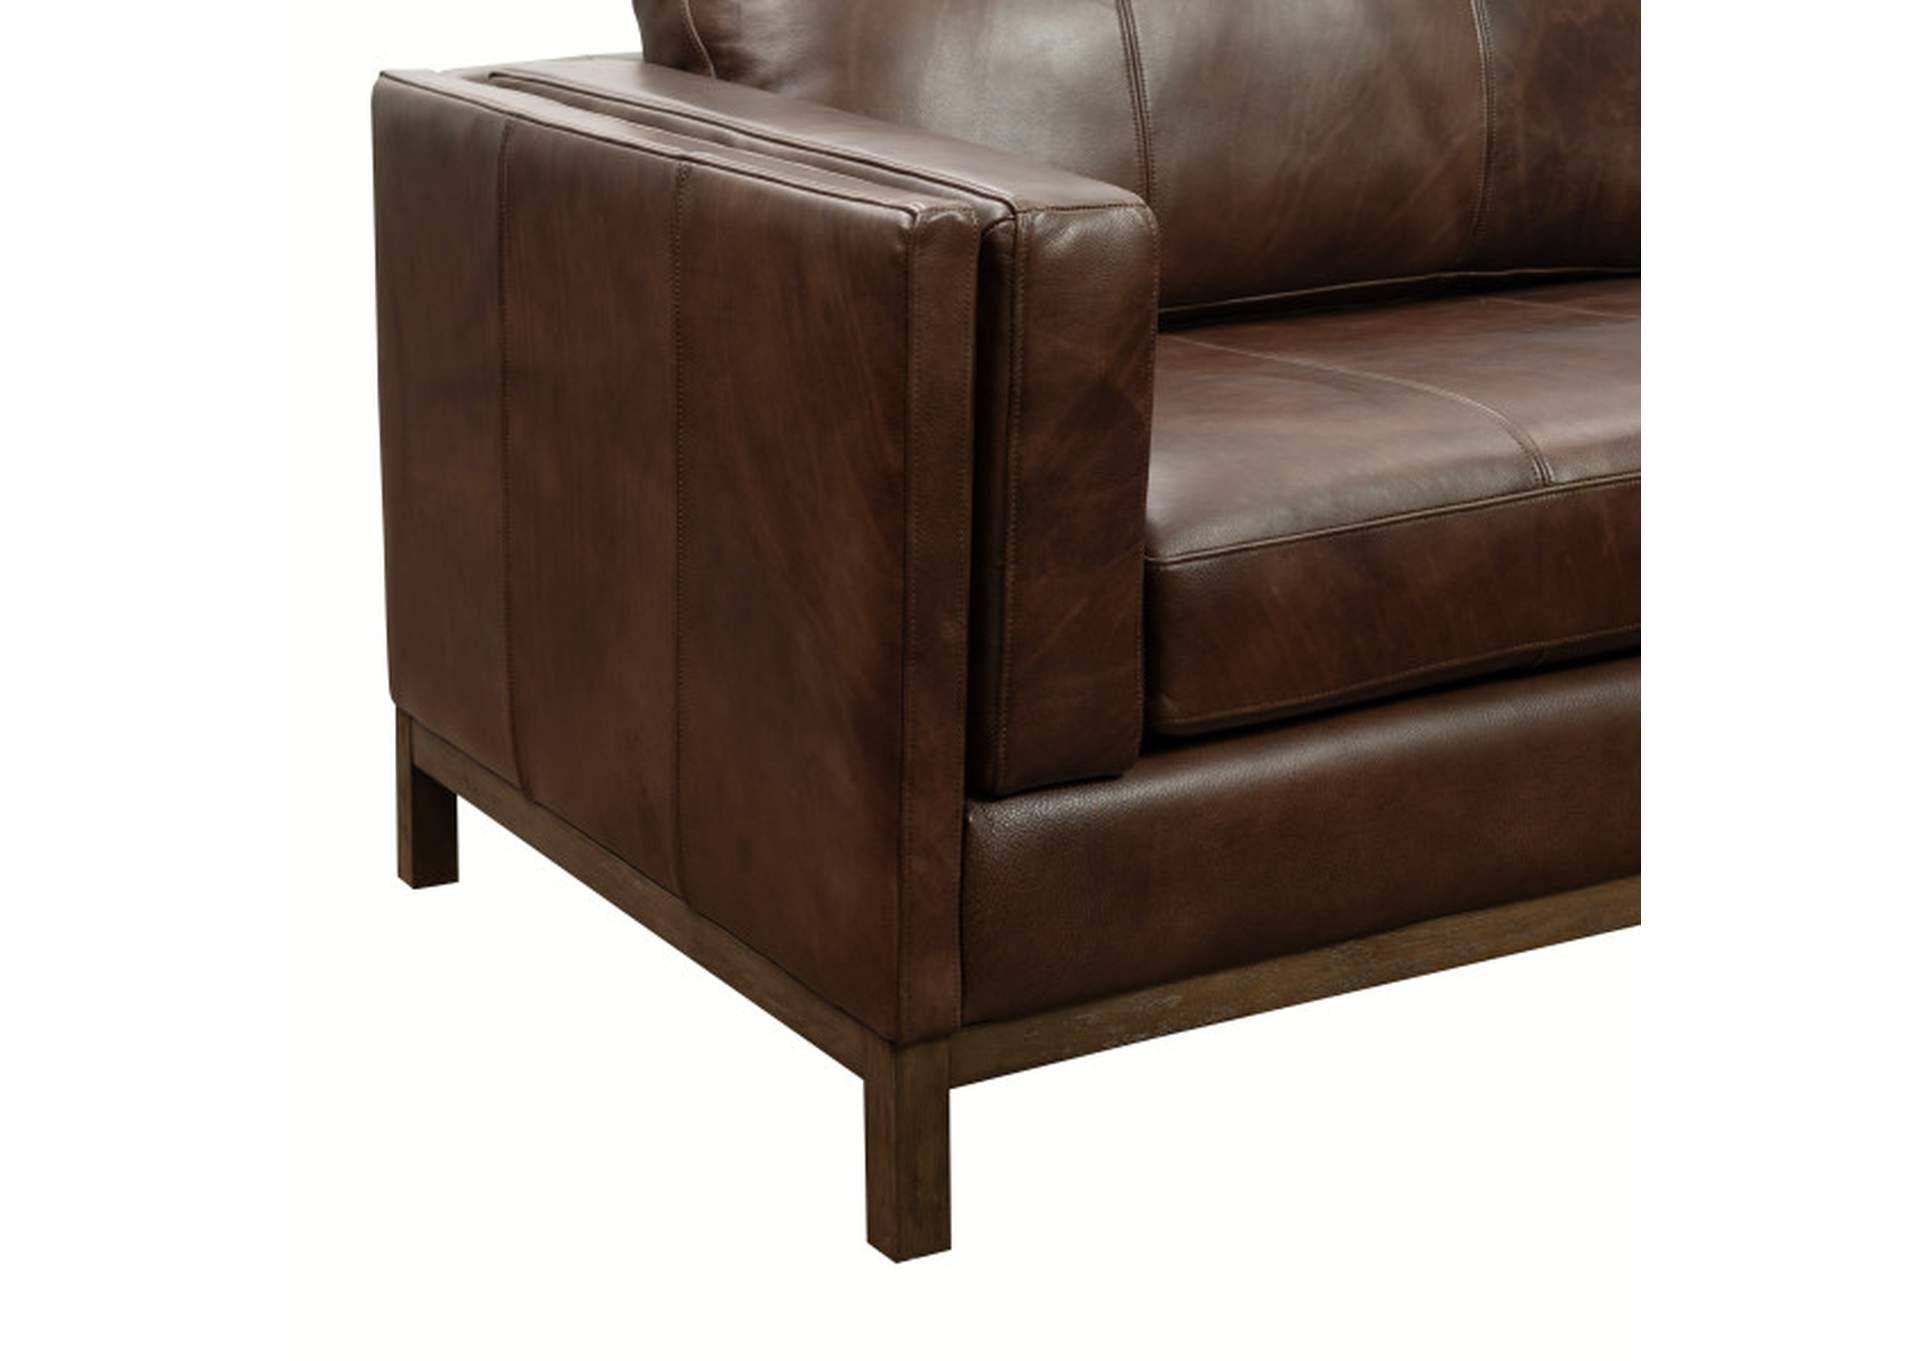 Drake Brown Leather Sofa with Wooden Base,Pulaski Furniture